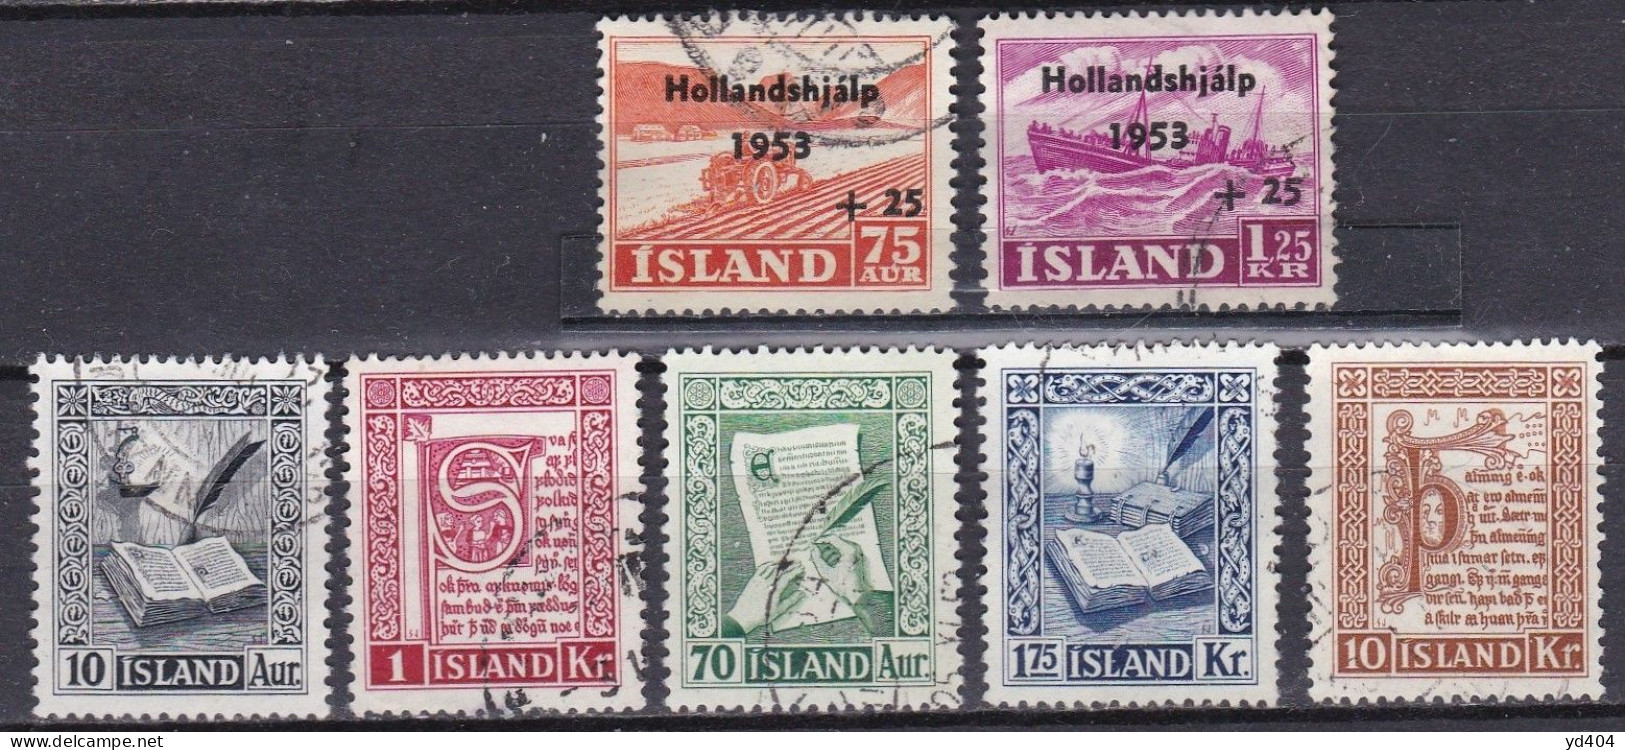 IS058 – ISLANDE – ICELAND – 1953 – FULL YEAR SET – SC # 278/82-B12/3 - USED 13,50 € - Usados